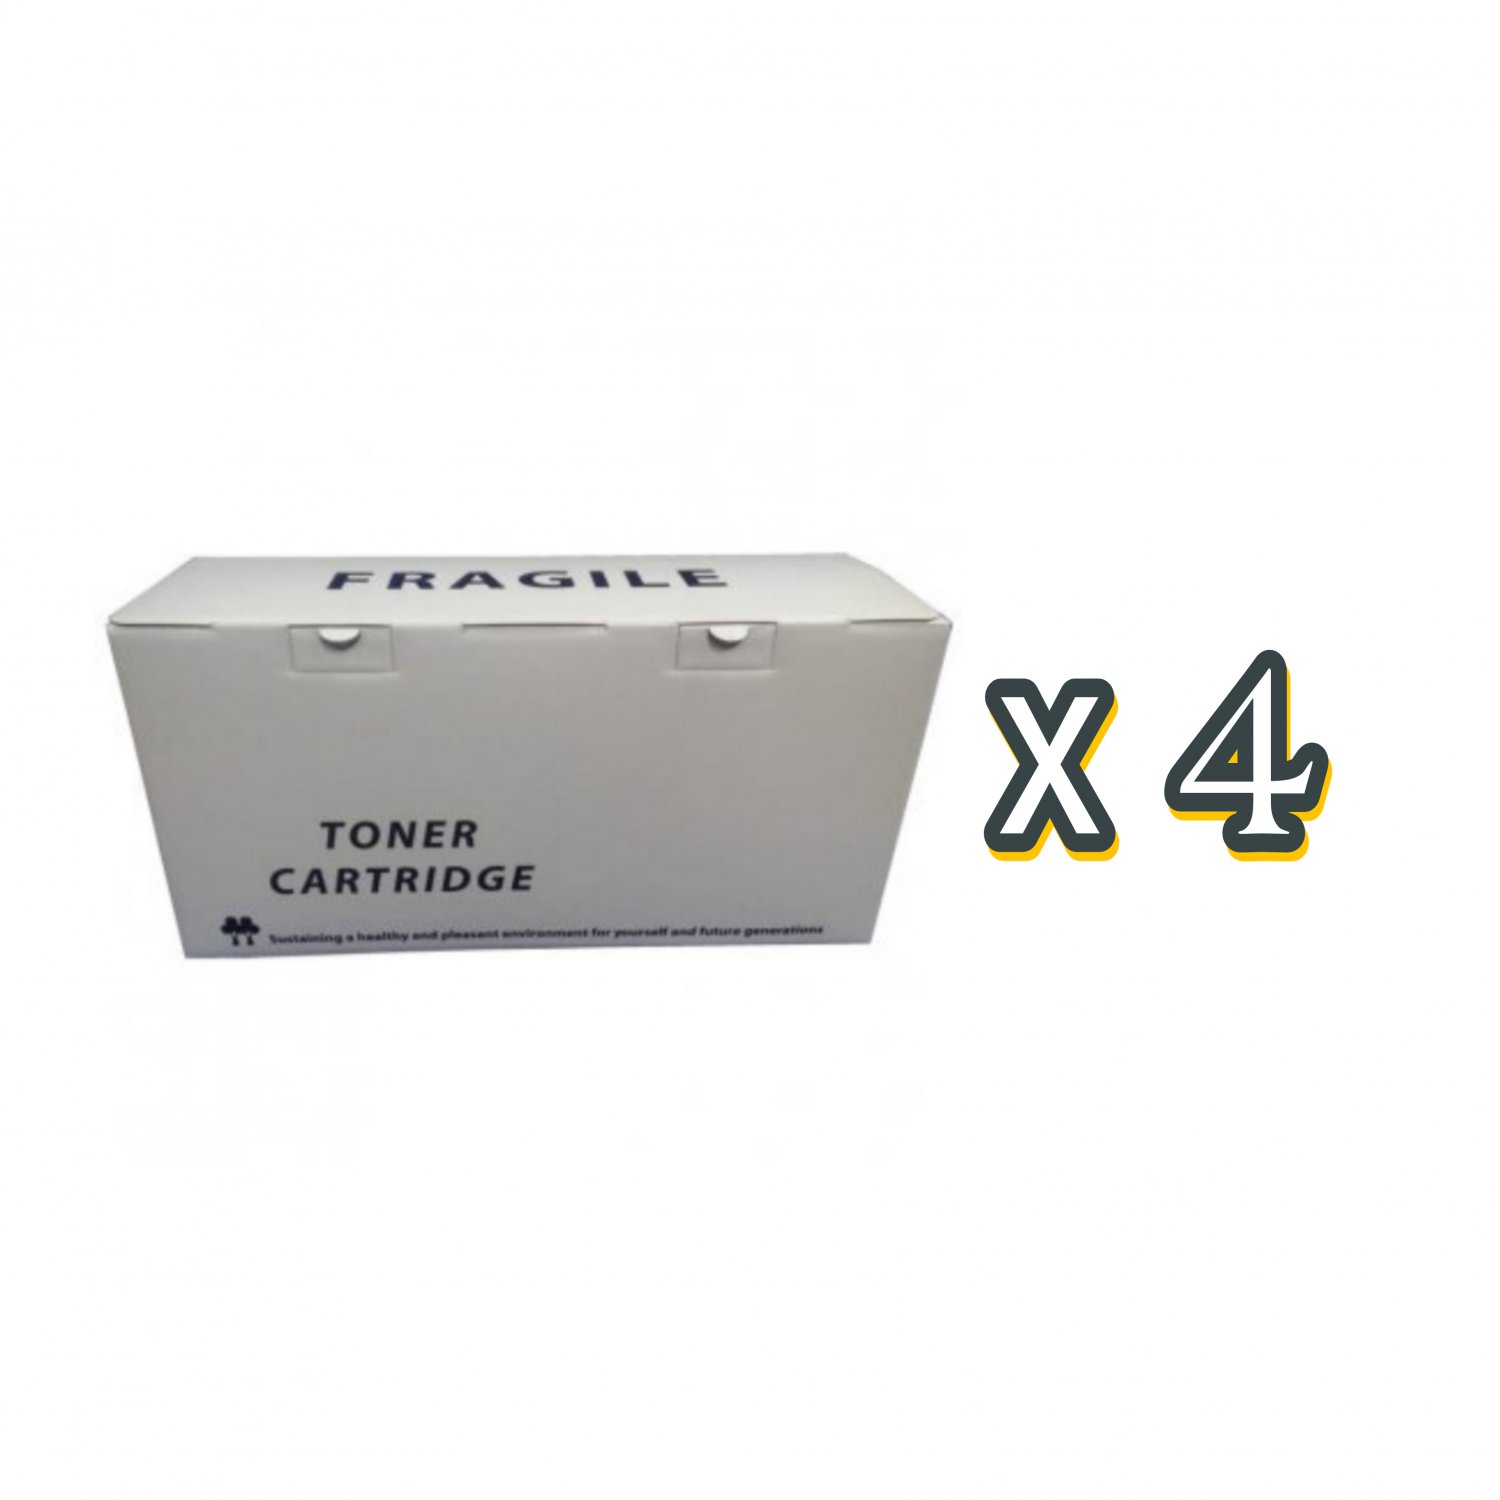 4PK CE413A Magenta Toner For HP 305A LaserJet Pro 400 M451dn M451dw M475dw